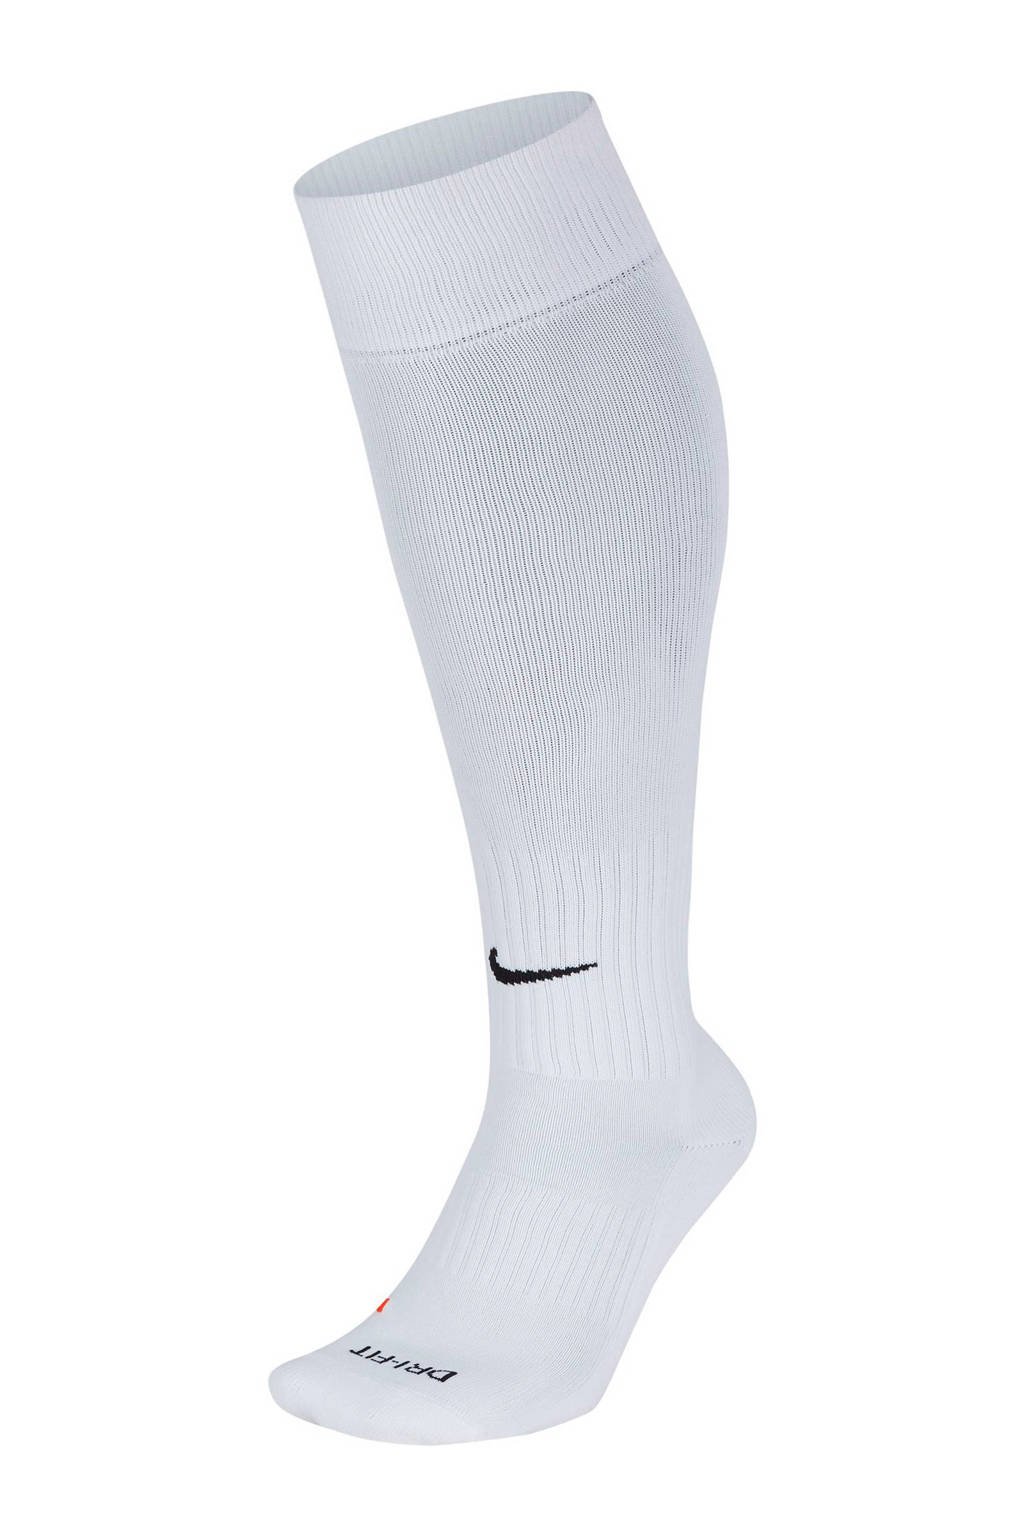 Nike   voetbalsokken wit